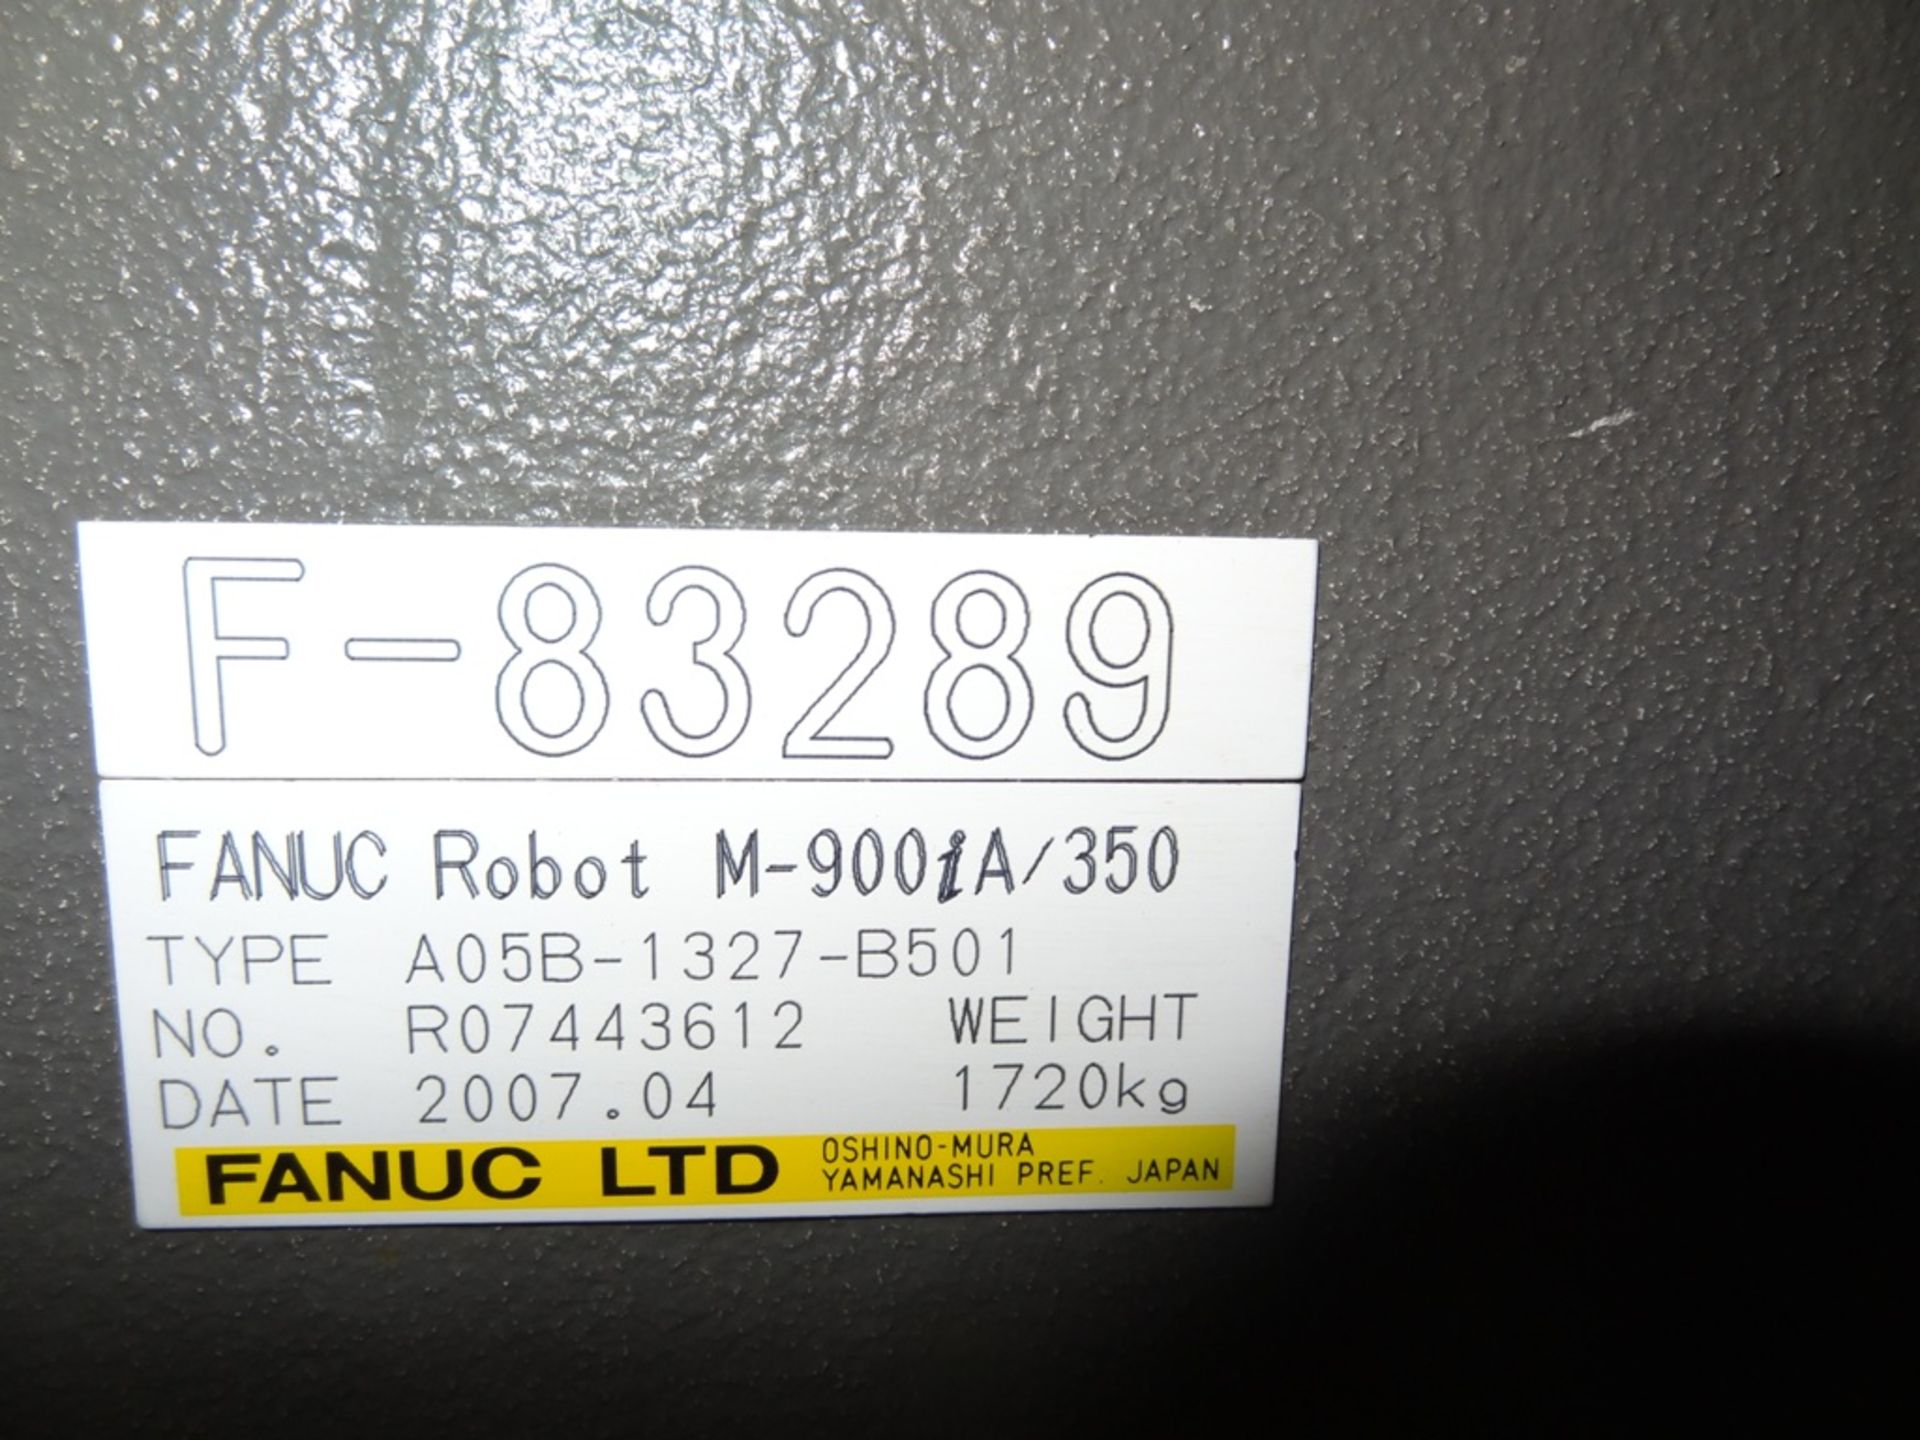 FANUC M900iA/350 6 AXIS CNC ROBOT 350kg CAPACITY, SN F83289, YEAR 2007, LOCATION MI - Image 8 of 8